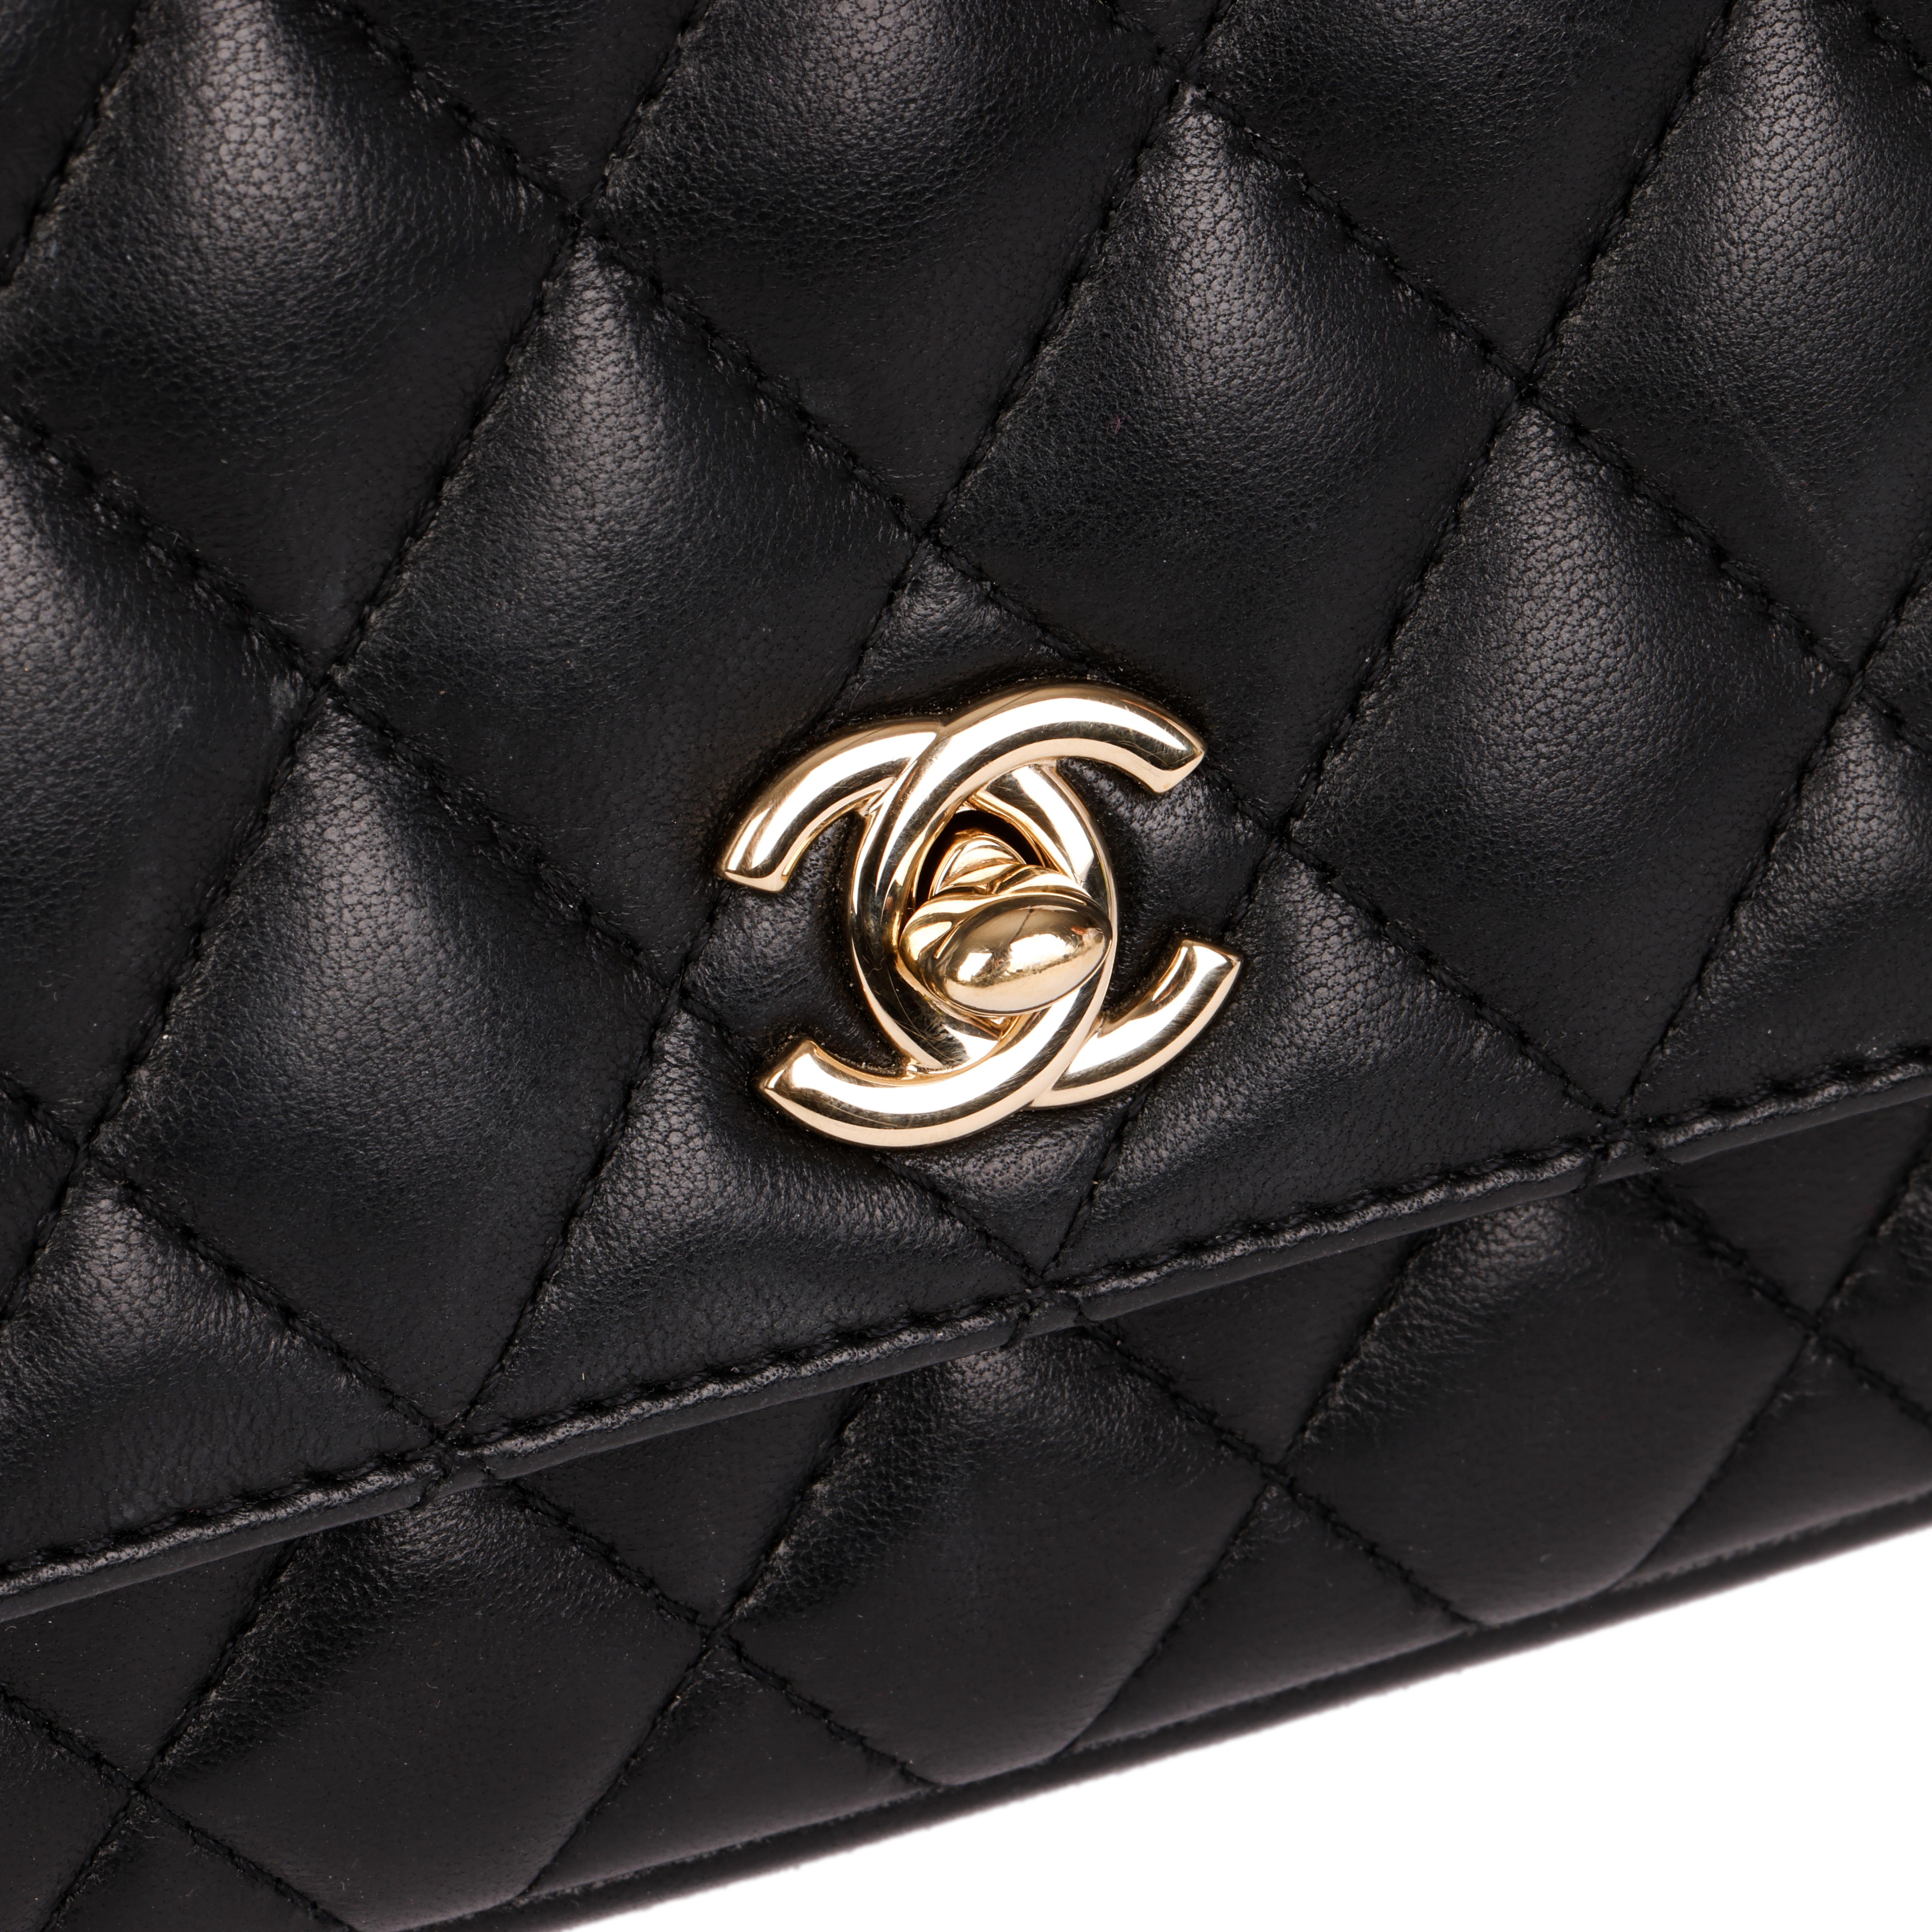 Chanel Side Packs - For Sale on 1stDibs | chanel side pack bag, chanel side  packs price, chanelside